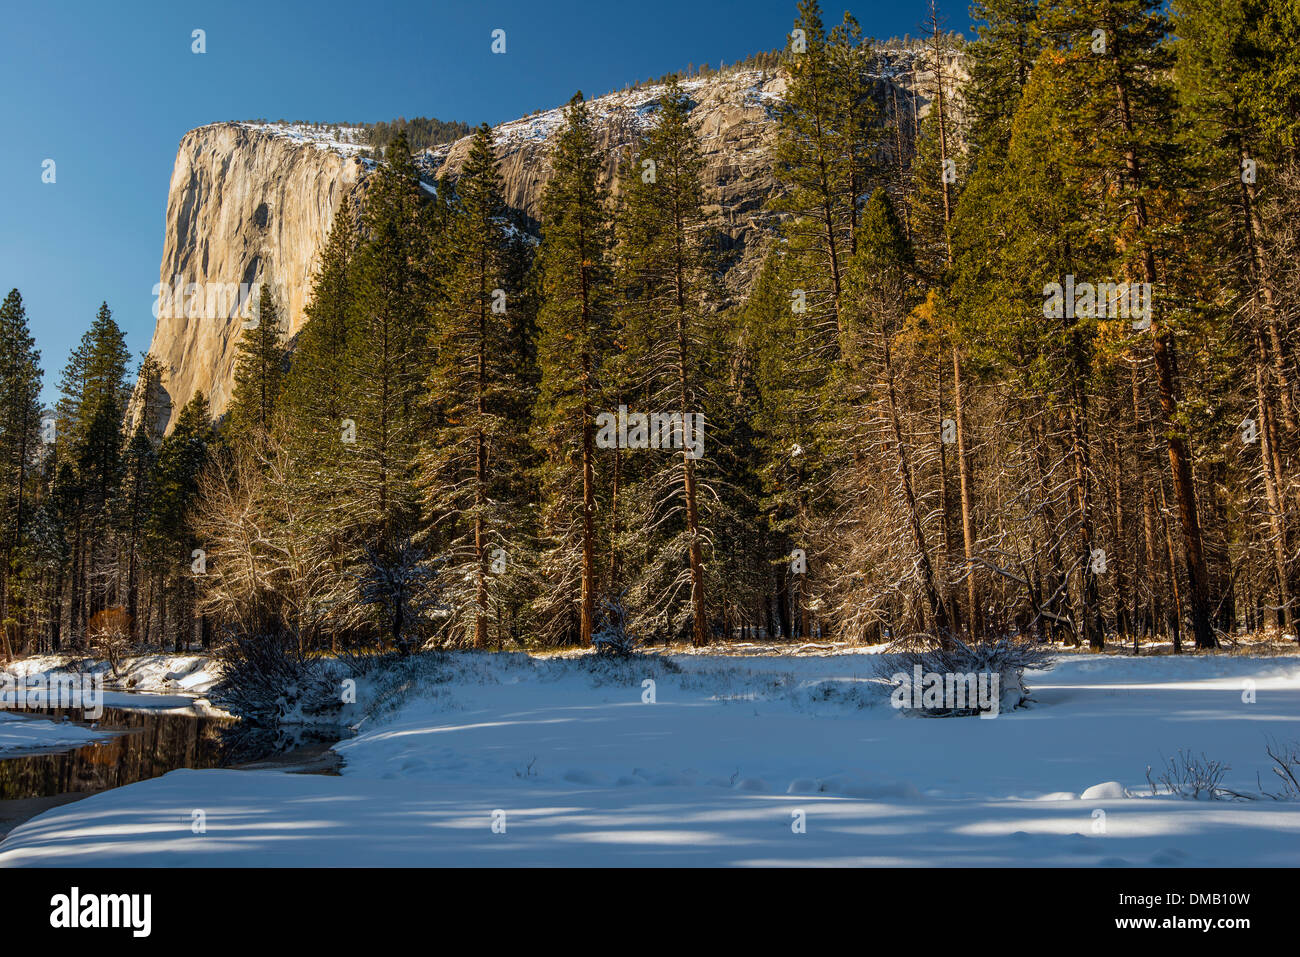 Scenic winter landscape with El Capitan mountain, Yosemite National Park, California, USA Stock Photo